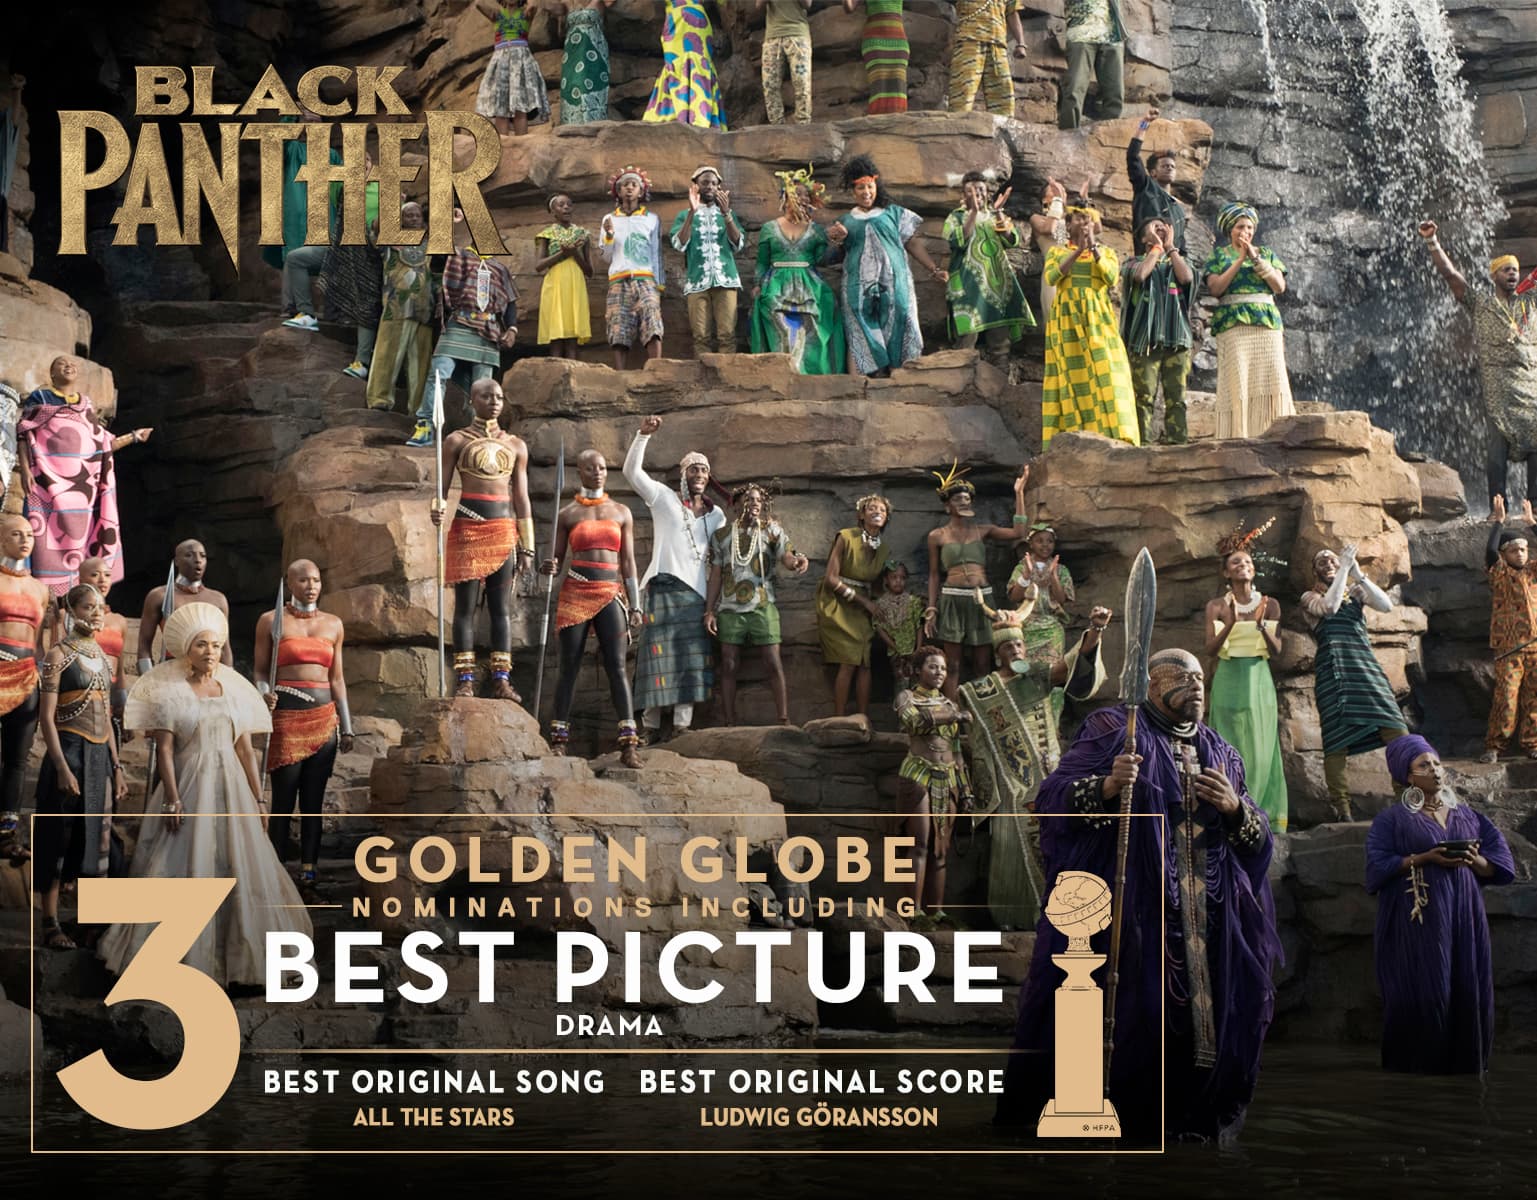 Marvel Studios&#39; Black Panther has been nominated for 3 Golden Globes